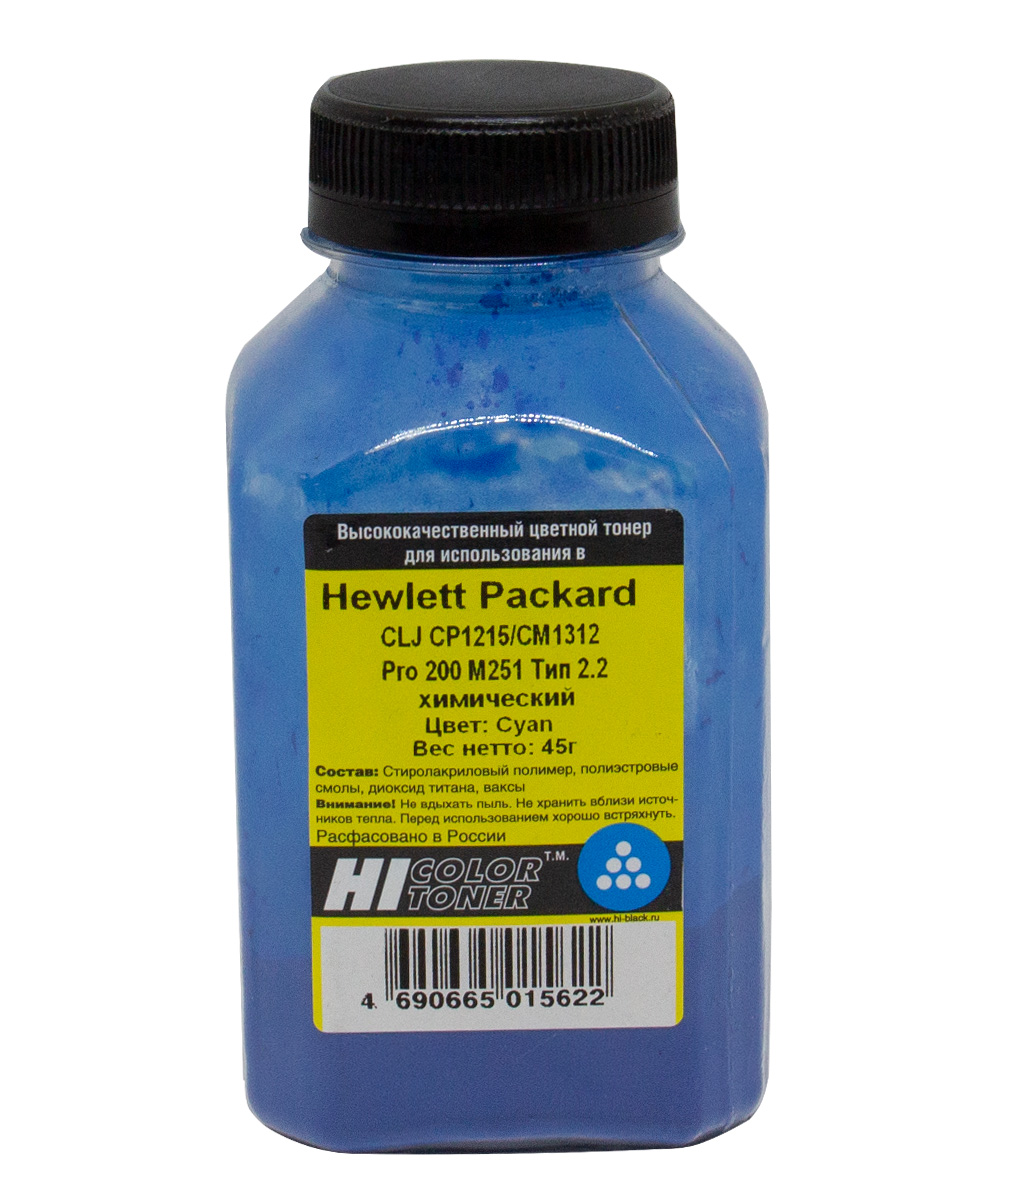 Тонер Hi-Black (Тип 2.2) химический для HP Color LJ CP1215/ CM1312/ Pro 200 M251, голубой, 45 г.